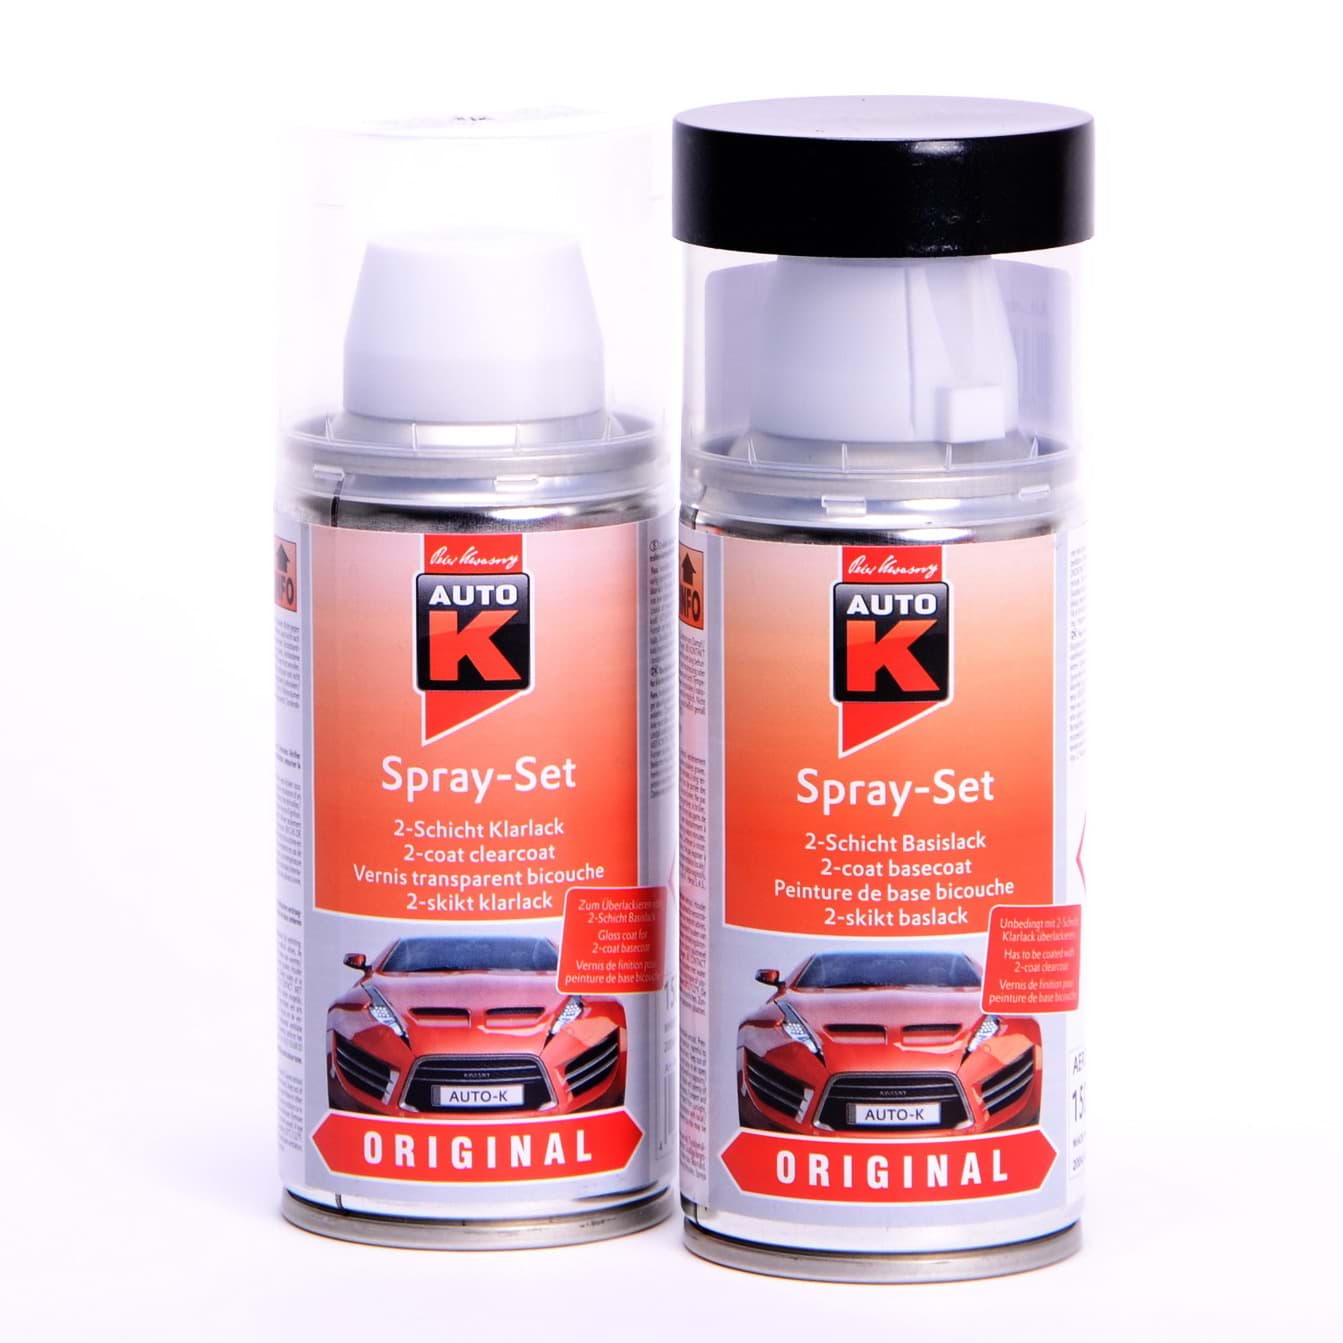 Afbeelding van Auto-K Spray-Set Autolack für Volkswagen, VW, Audi LX7Z Delphingrau met 20943